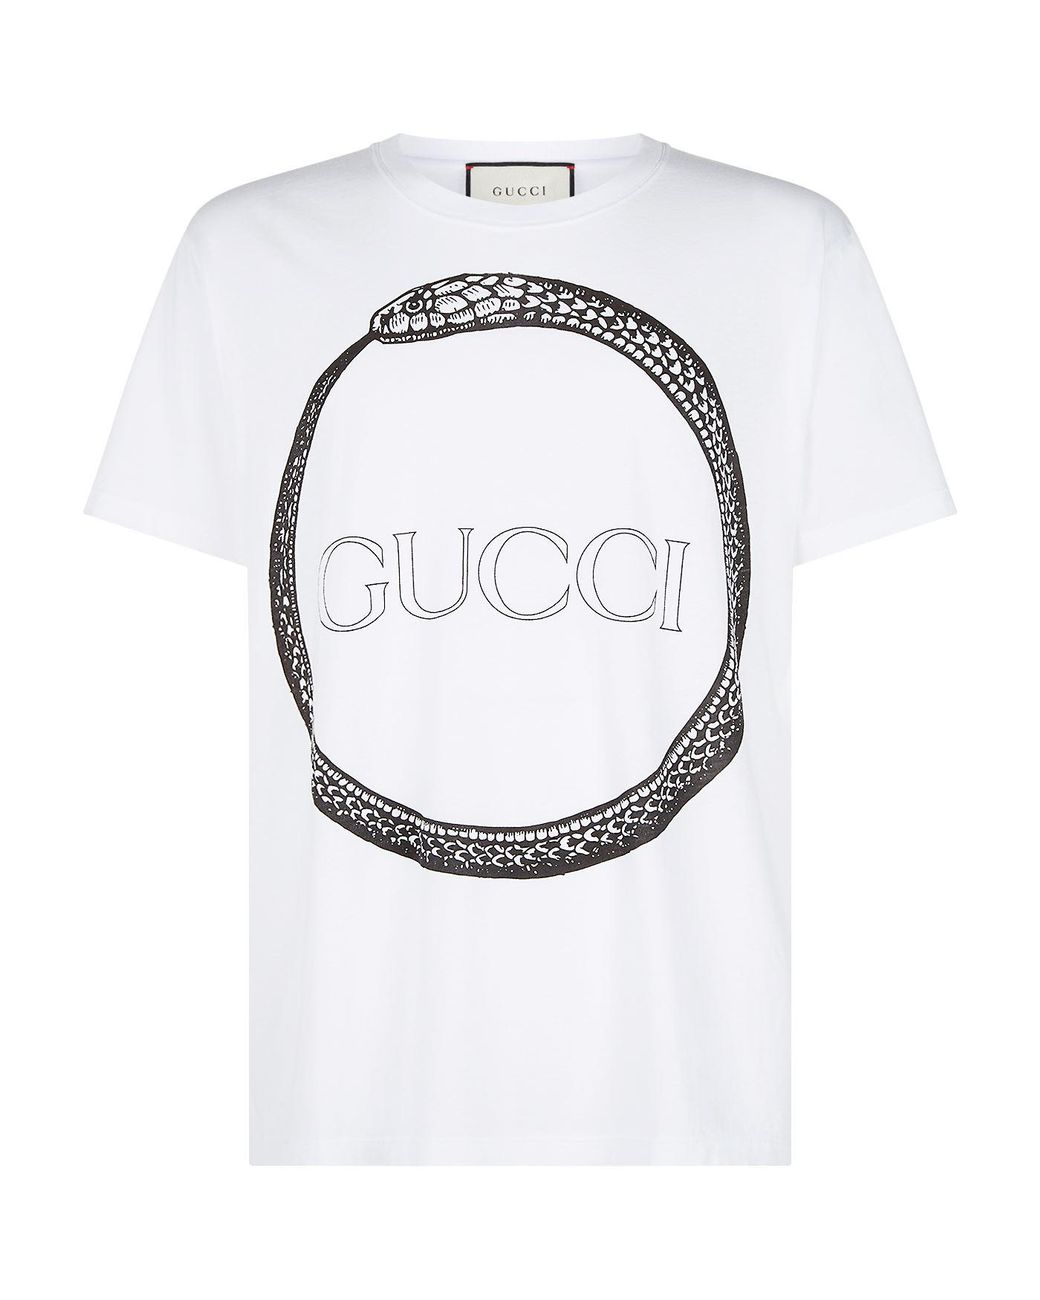 Gucci Snake T Shirt White | vlr.eng.br